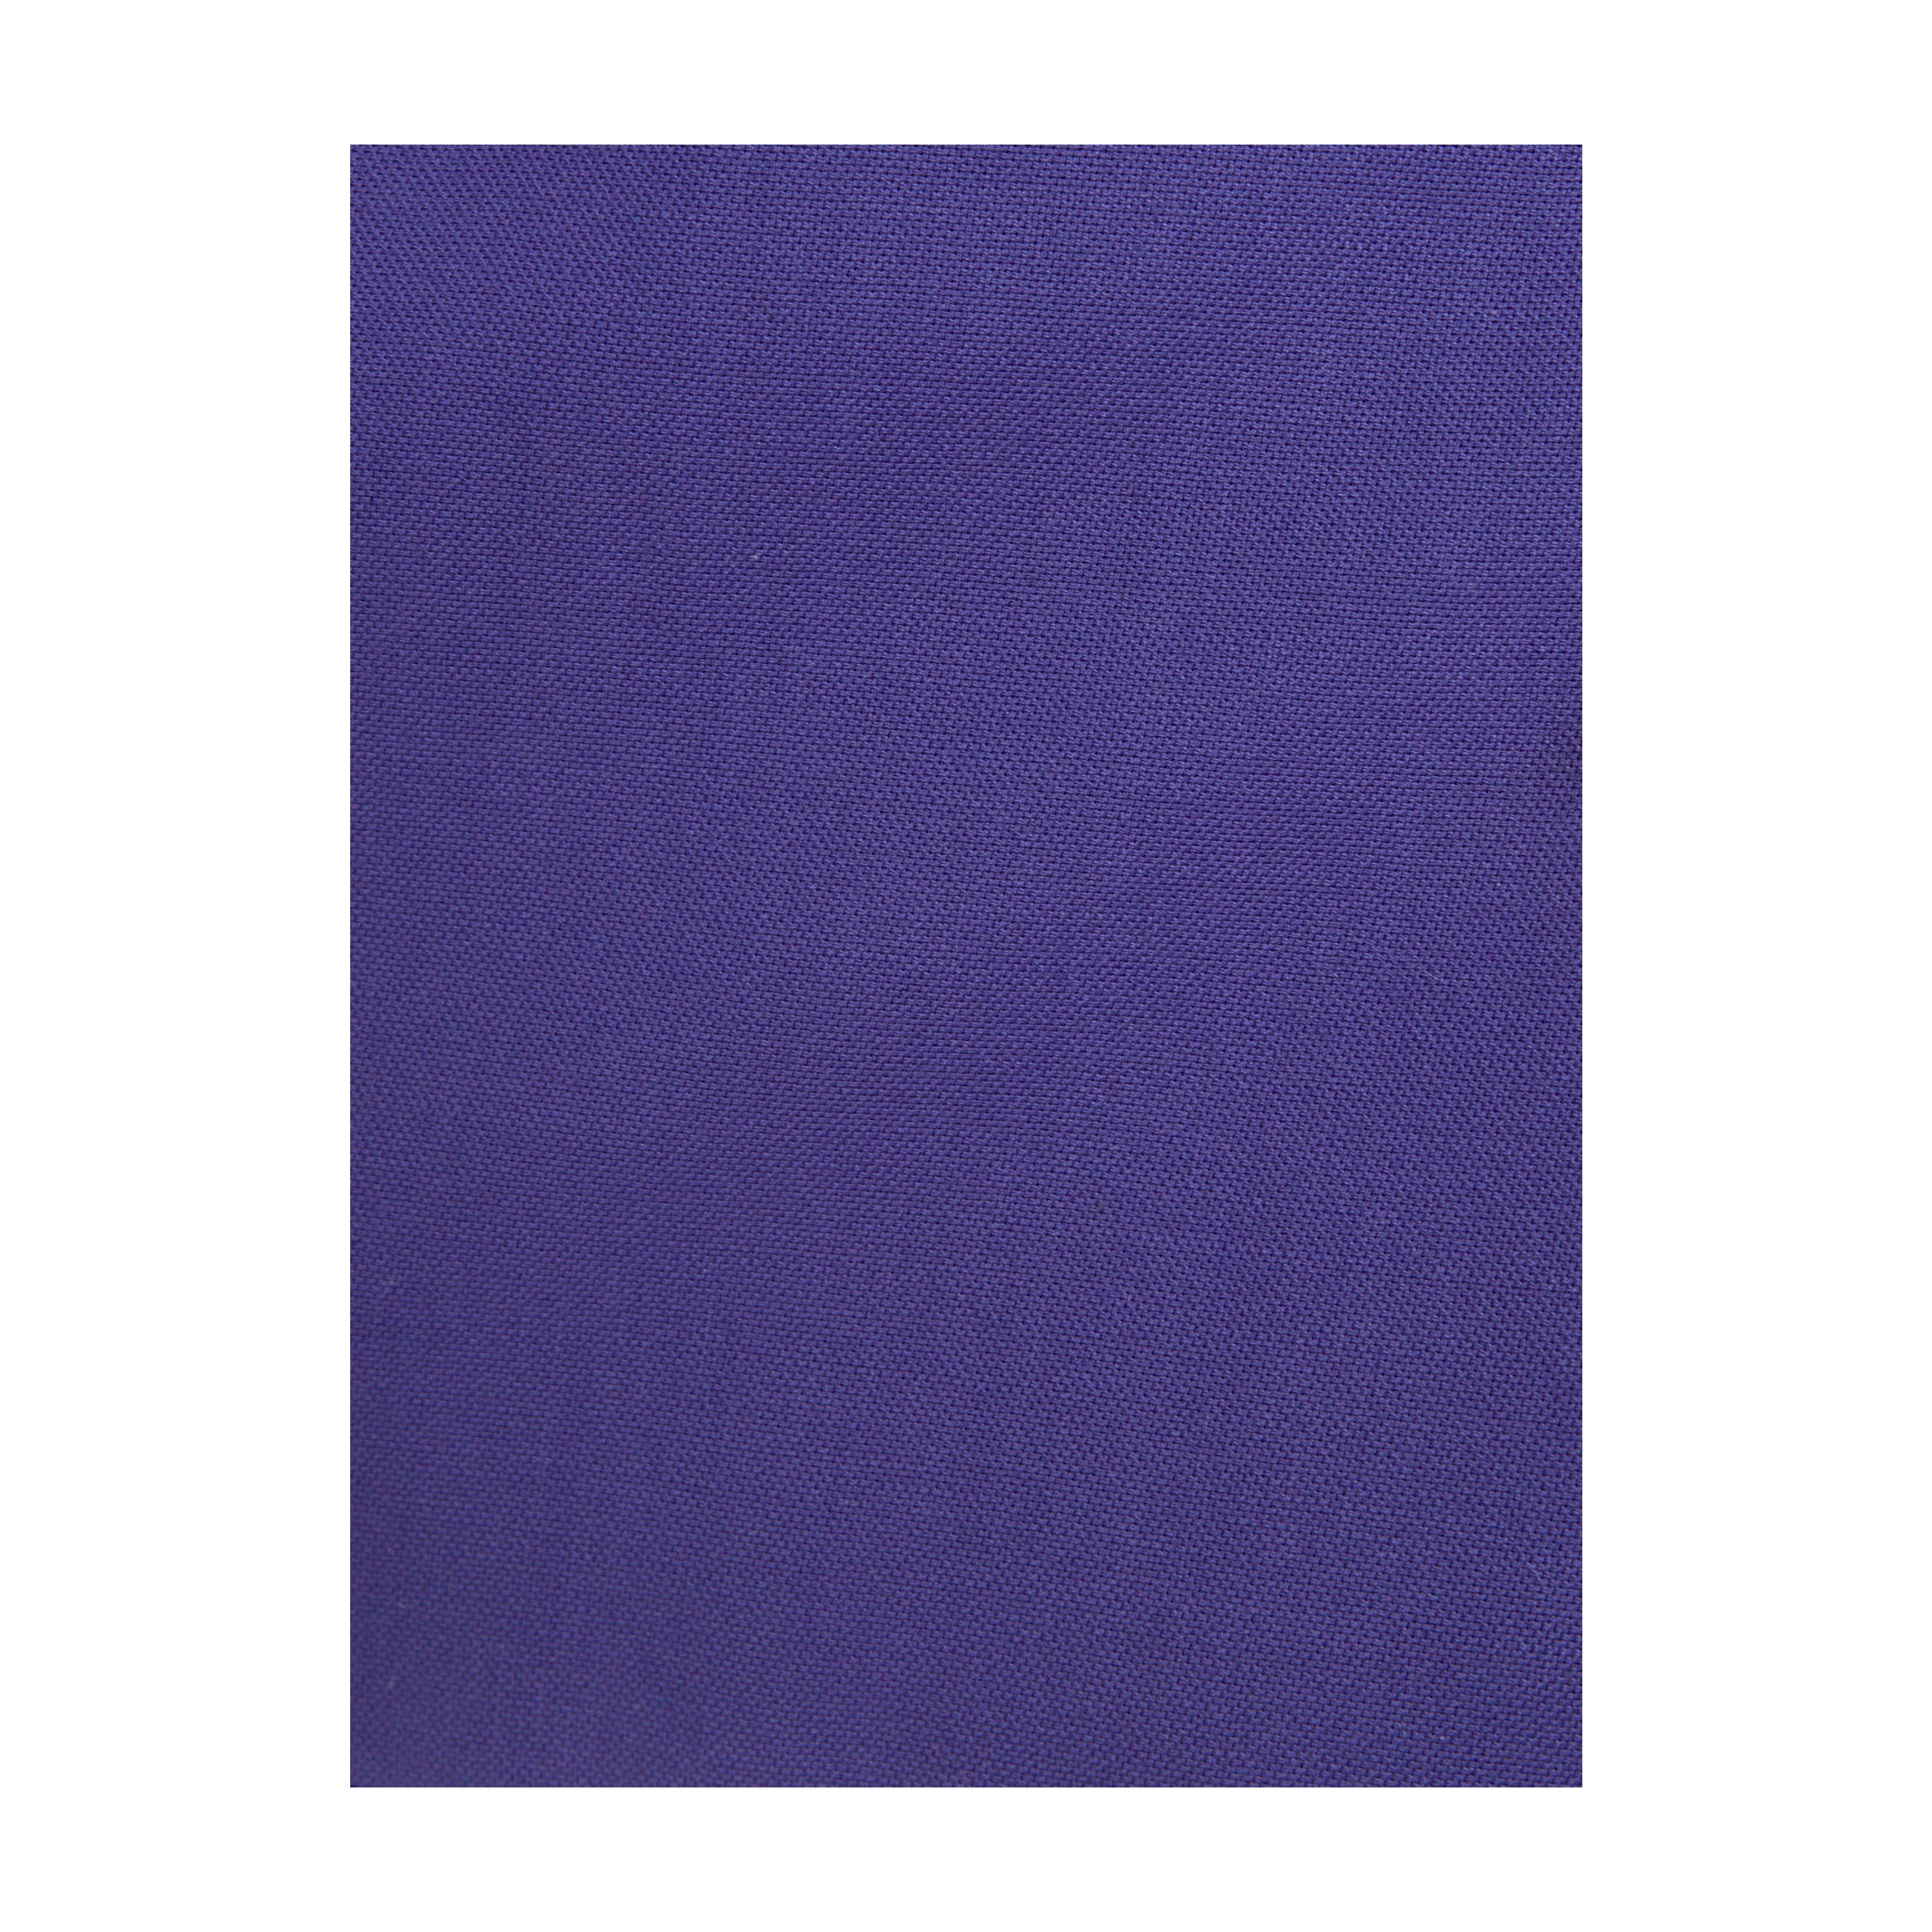 Gianni Versace Purple Suit For Sale 2